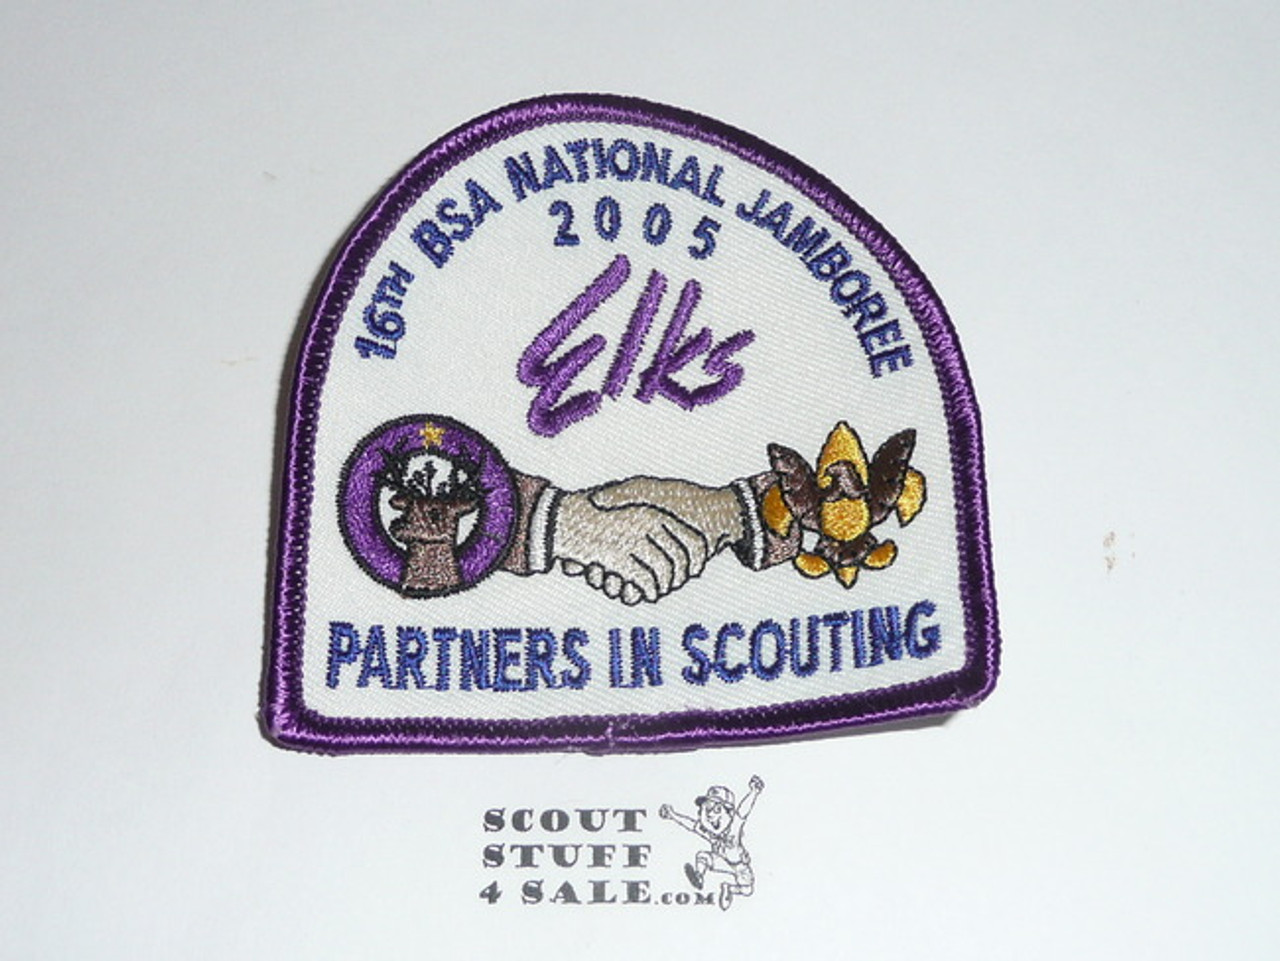 2005 National Jamboree Elks Patch